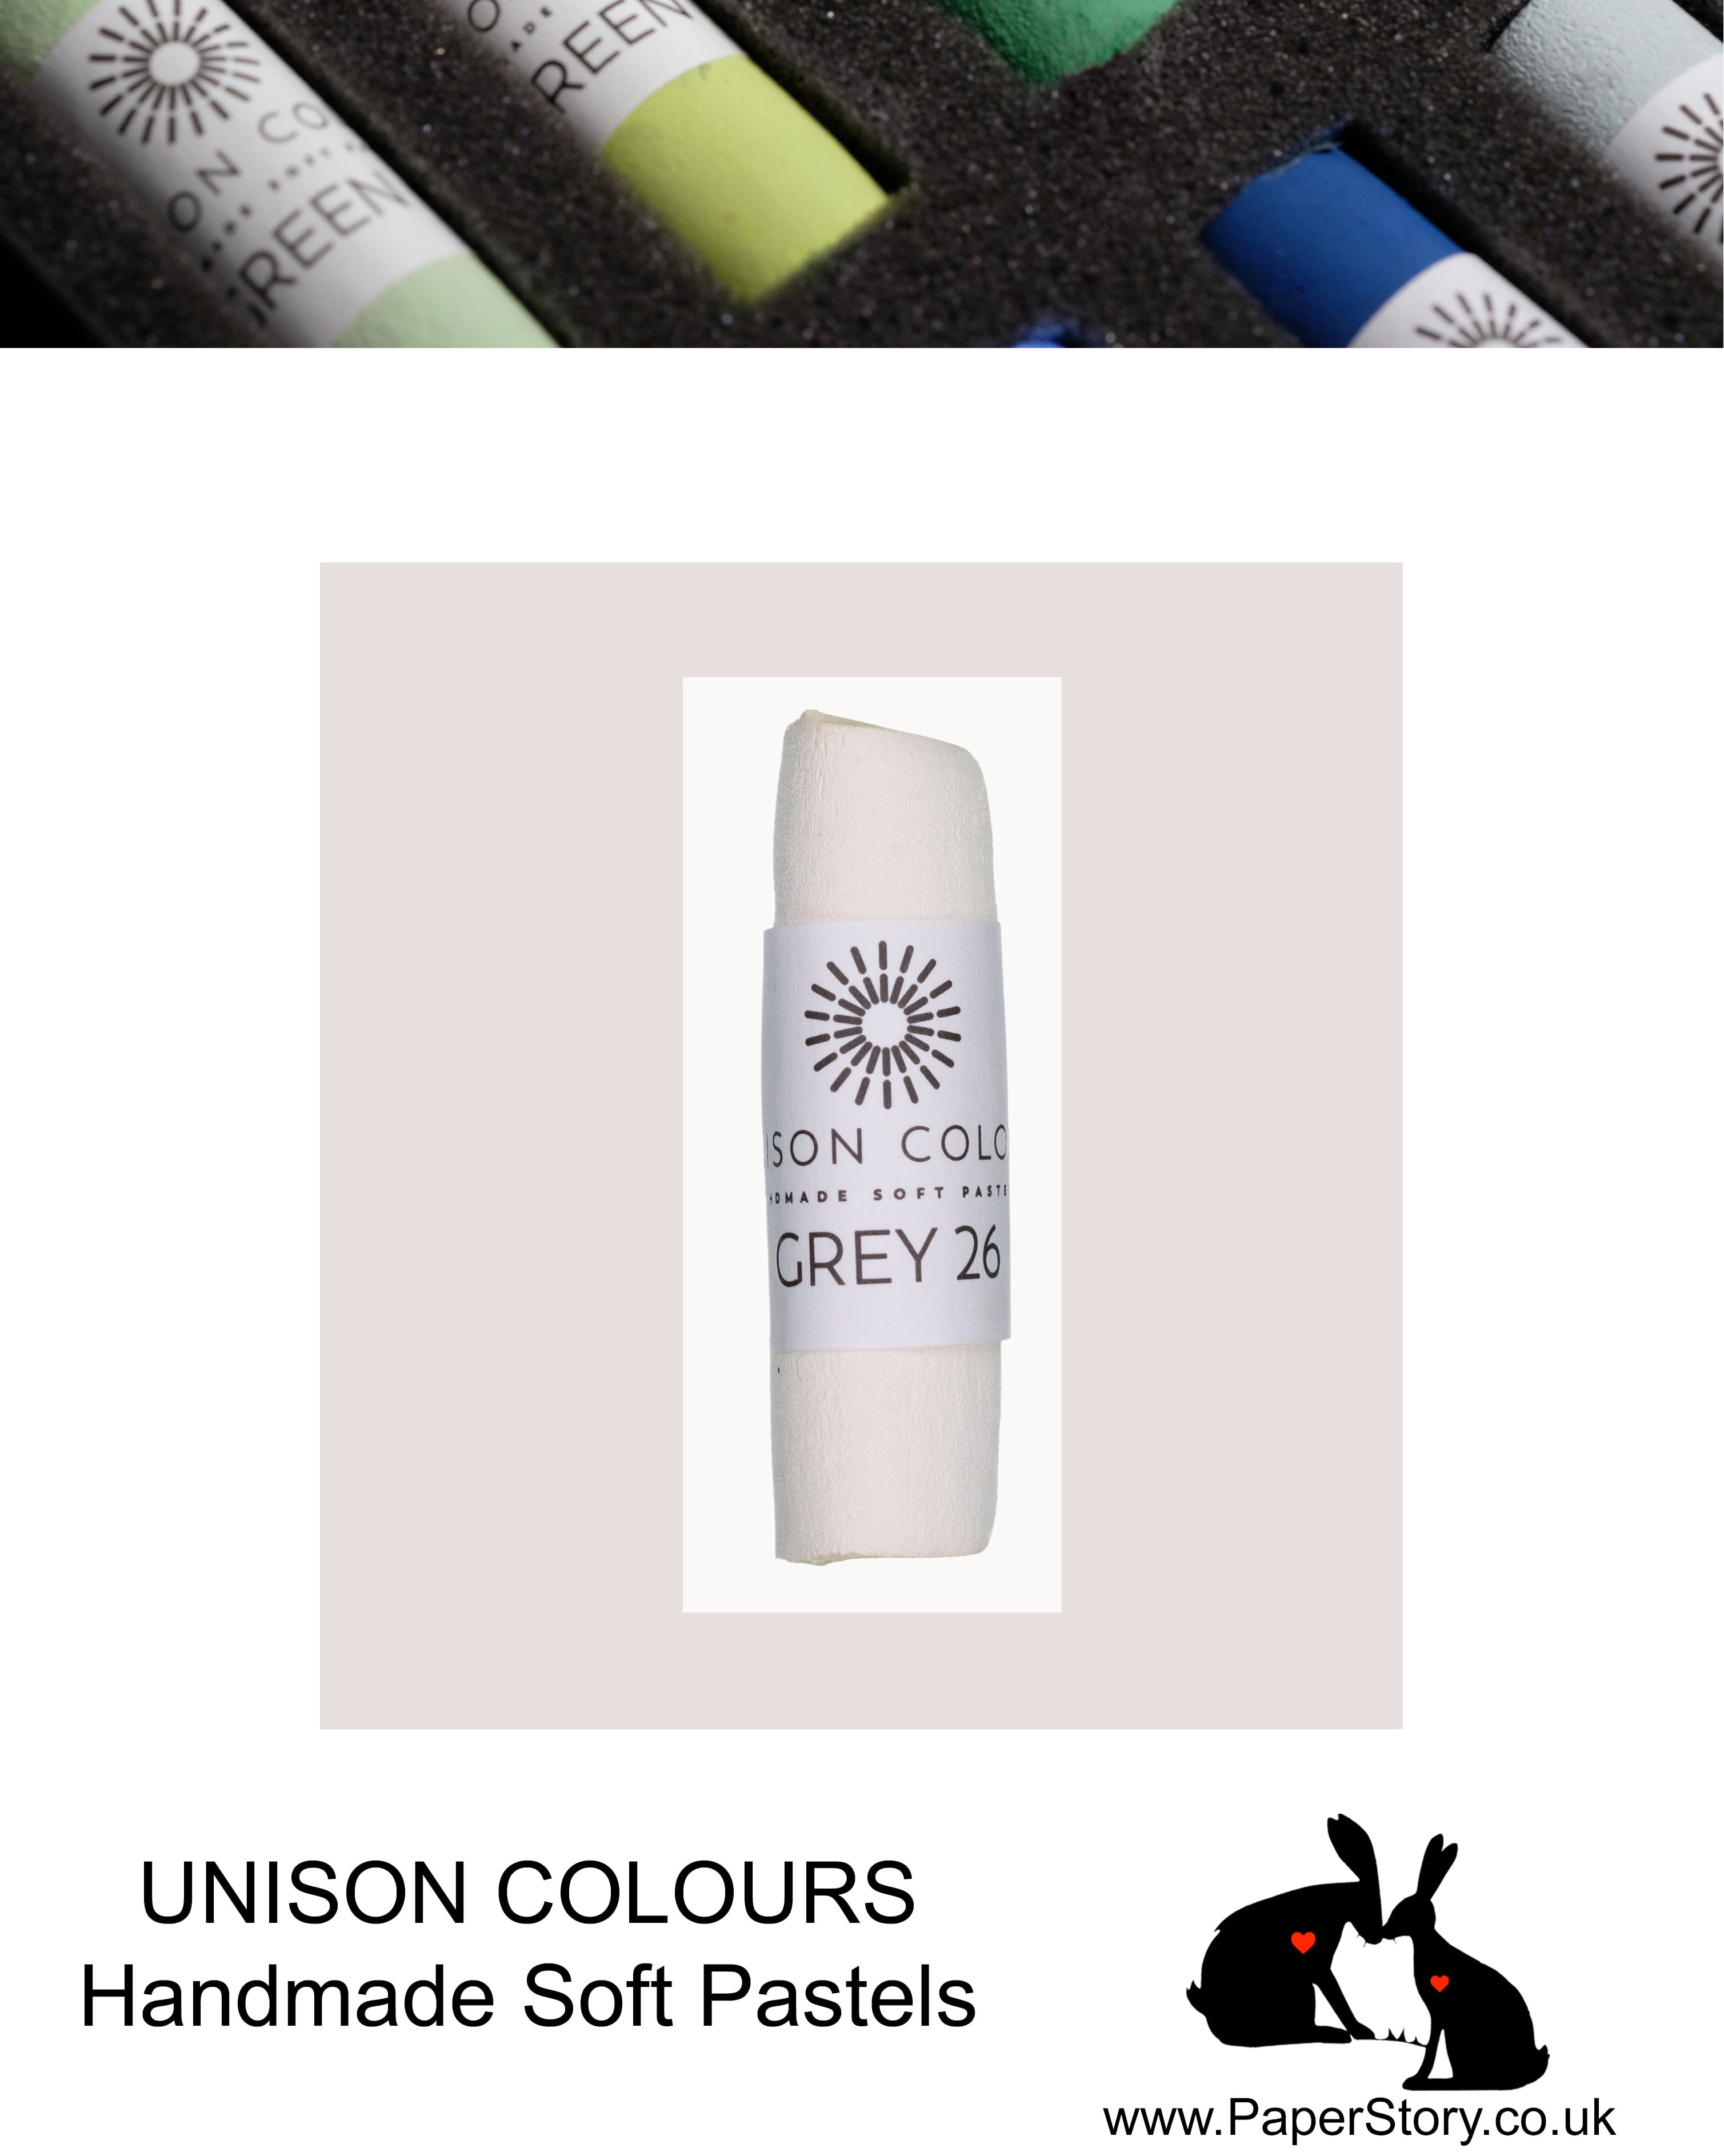 Unison Colour Handmade Soft Pastels Grey 26 - Size Regular